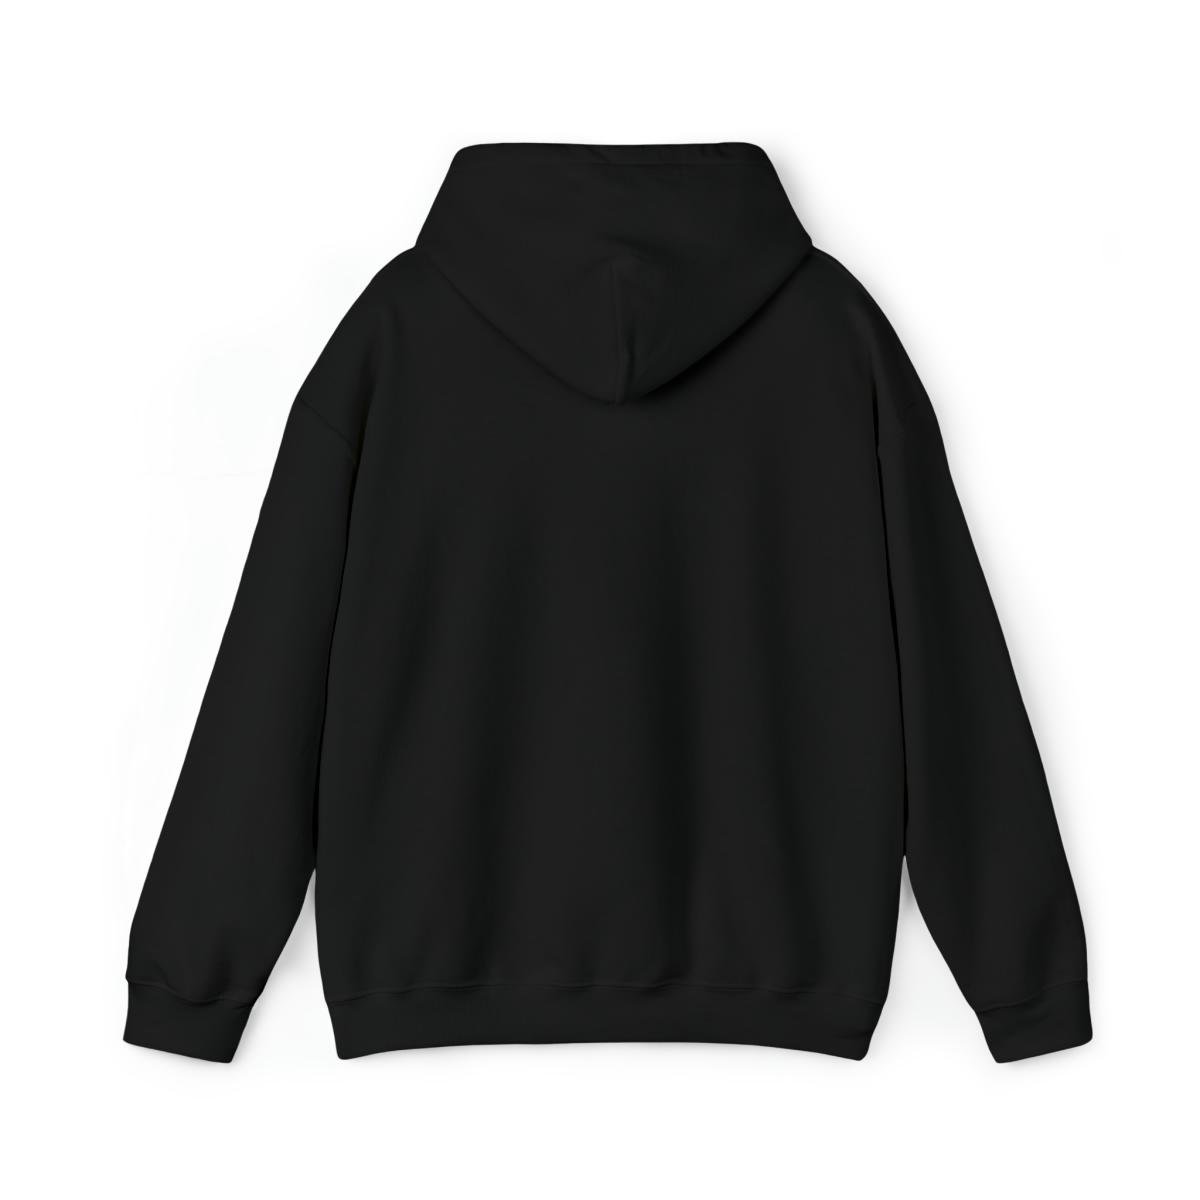 Crux – Failure To Yield Hooded Sweatshirt